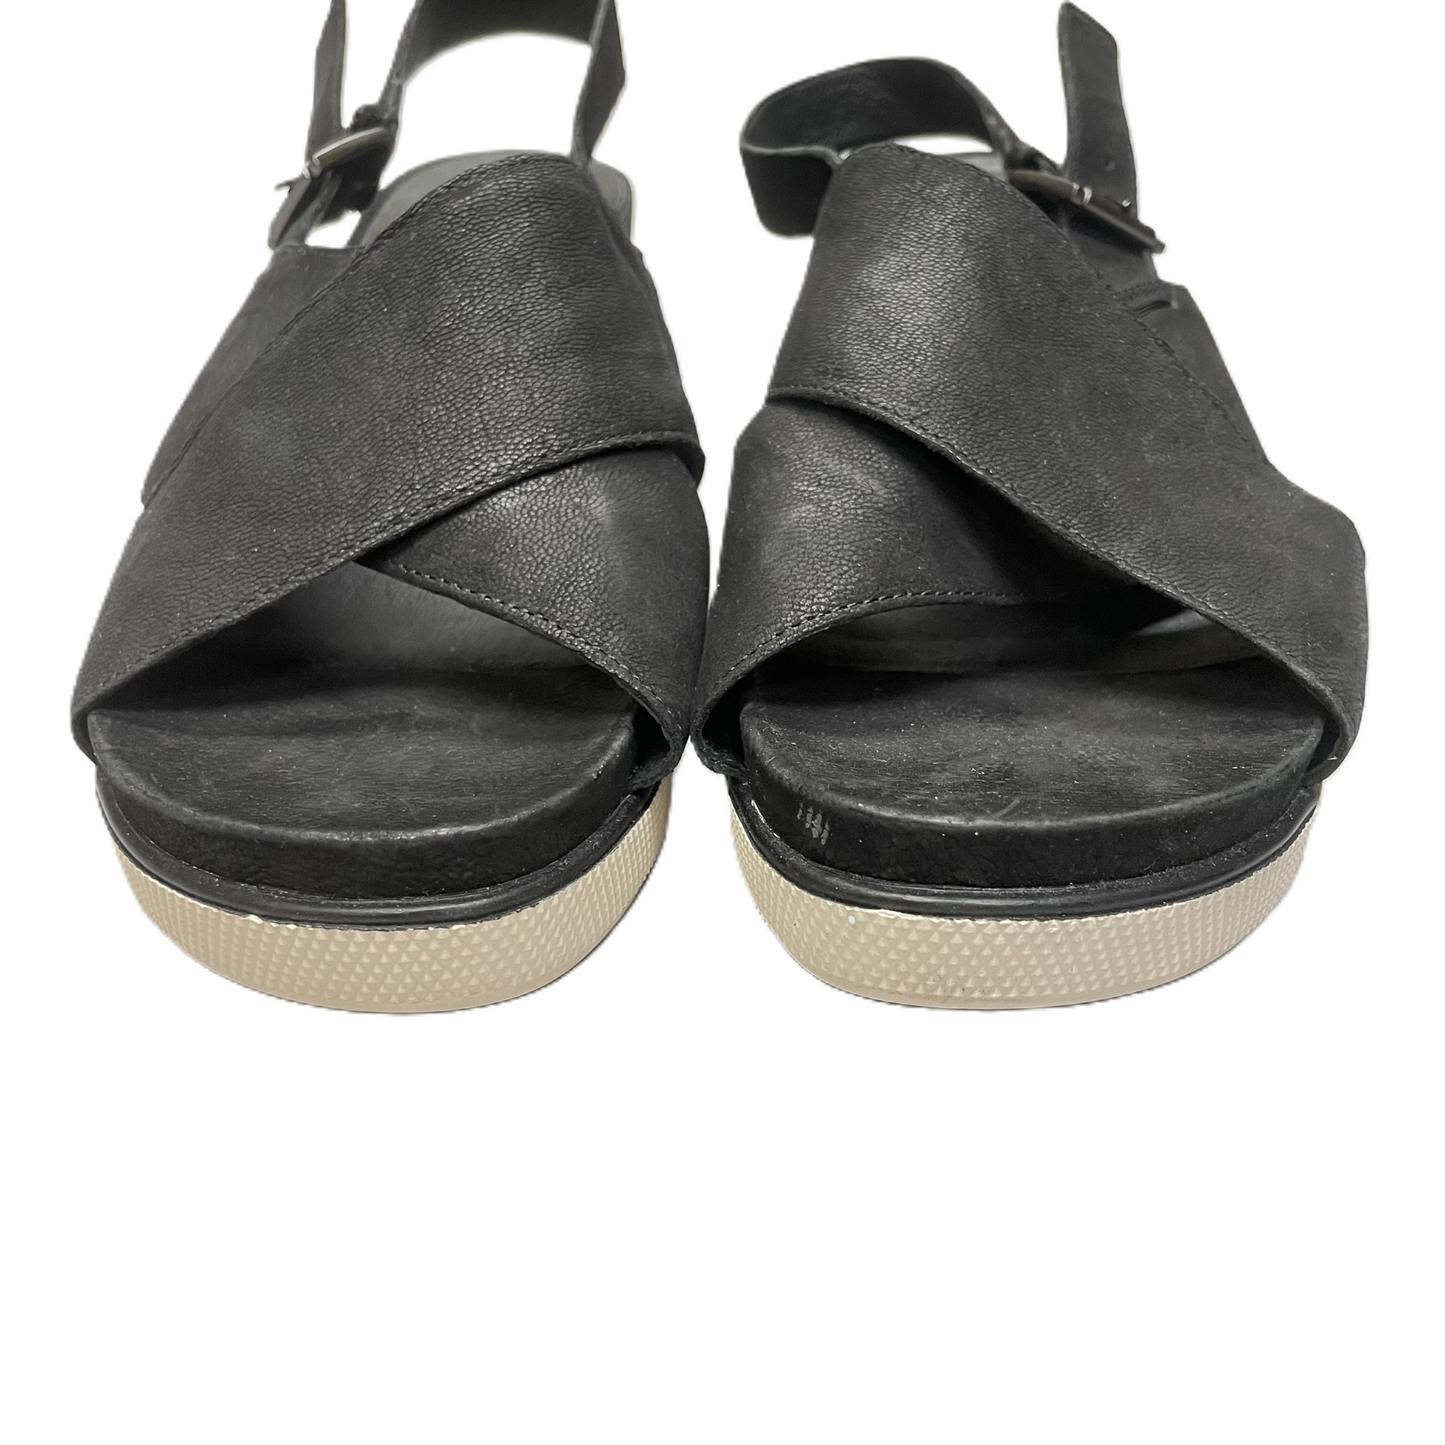 Black Sandals Heels Wedge By Eileen Fisher, Size: 8.5